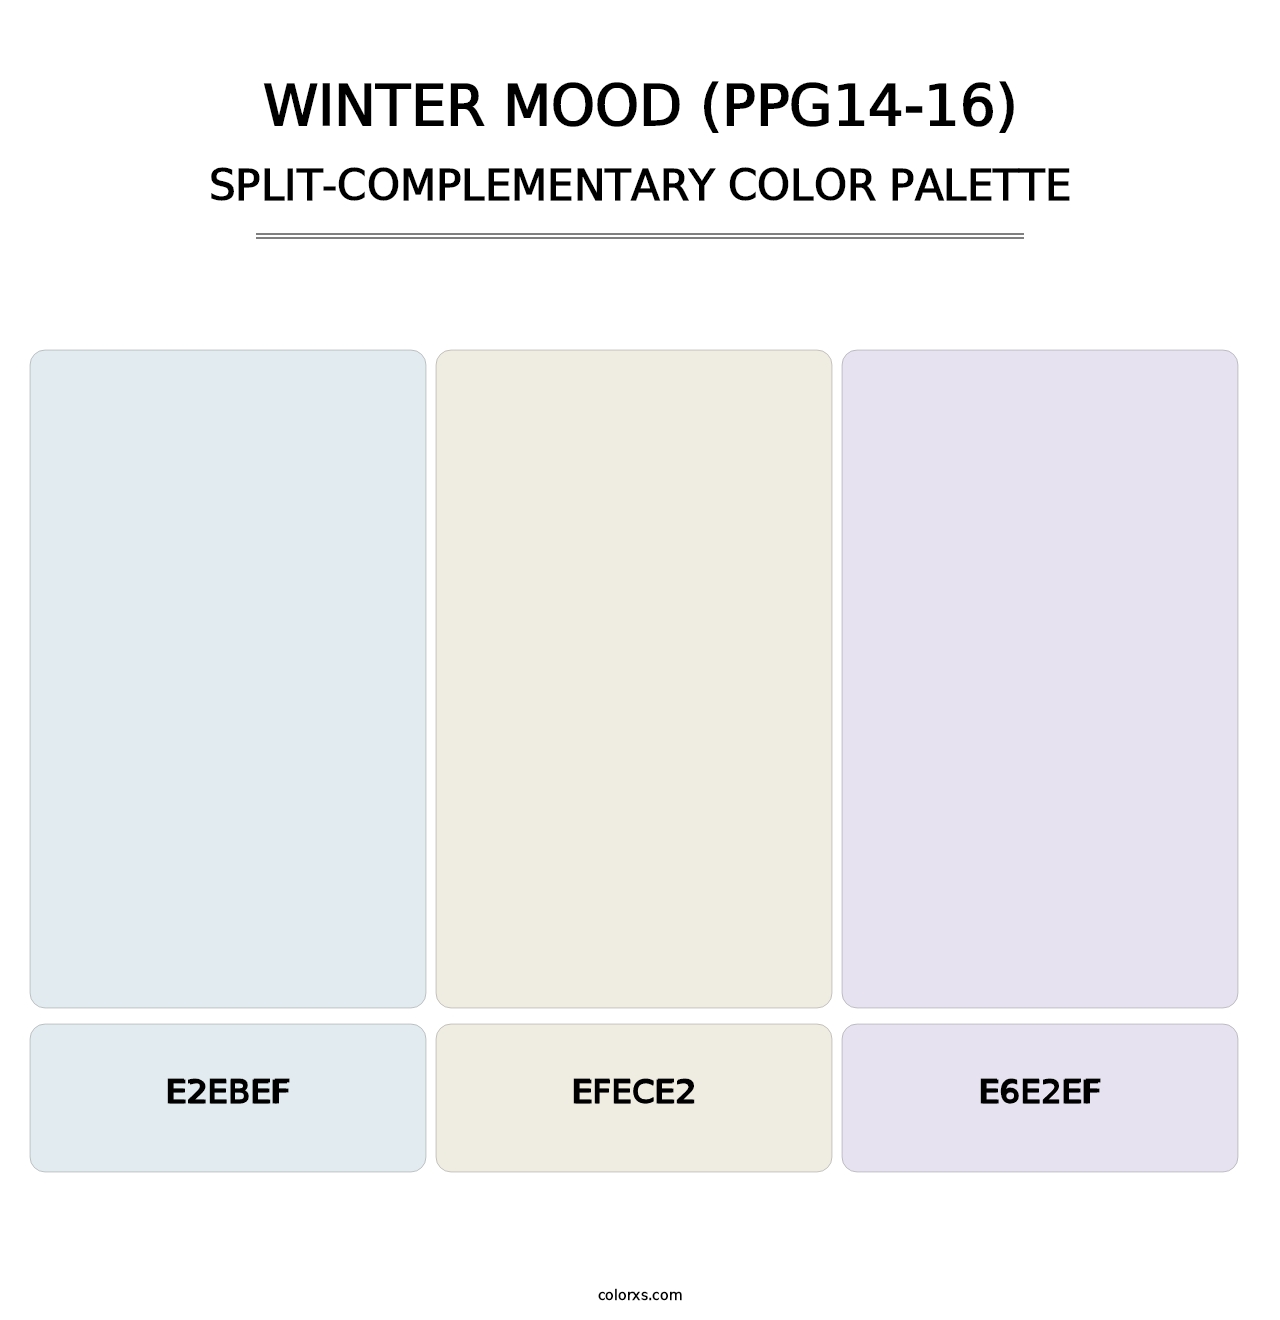 Winter Mood (PPG14-16) - Split-Complementary Color Palette